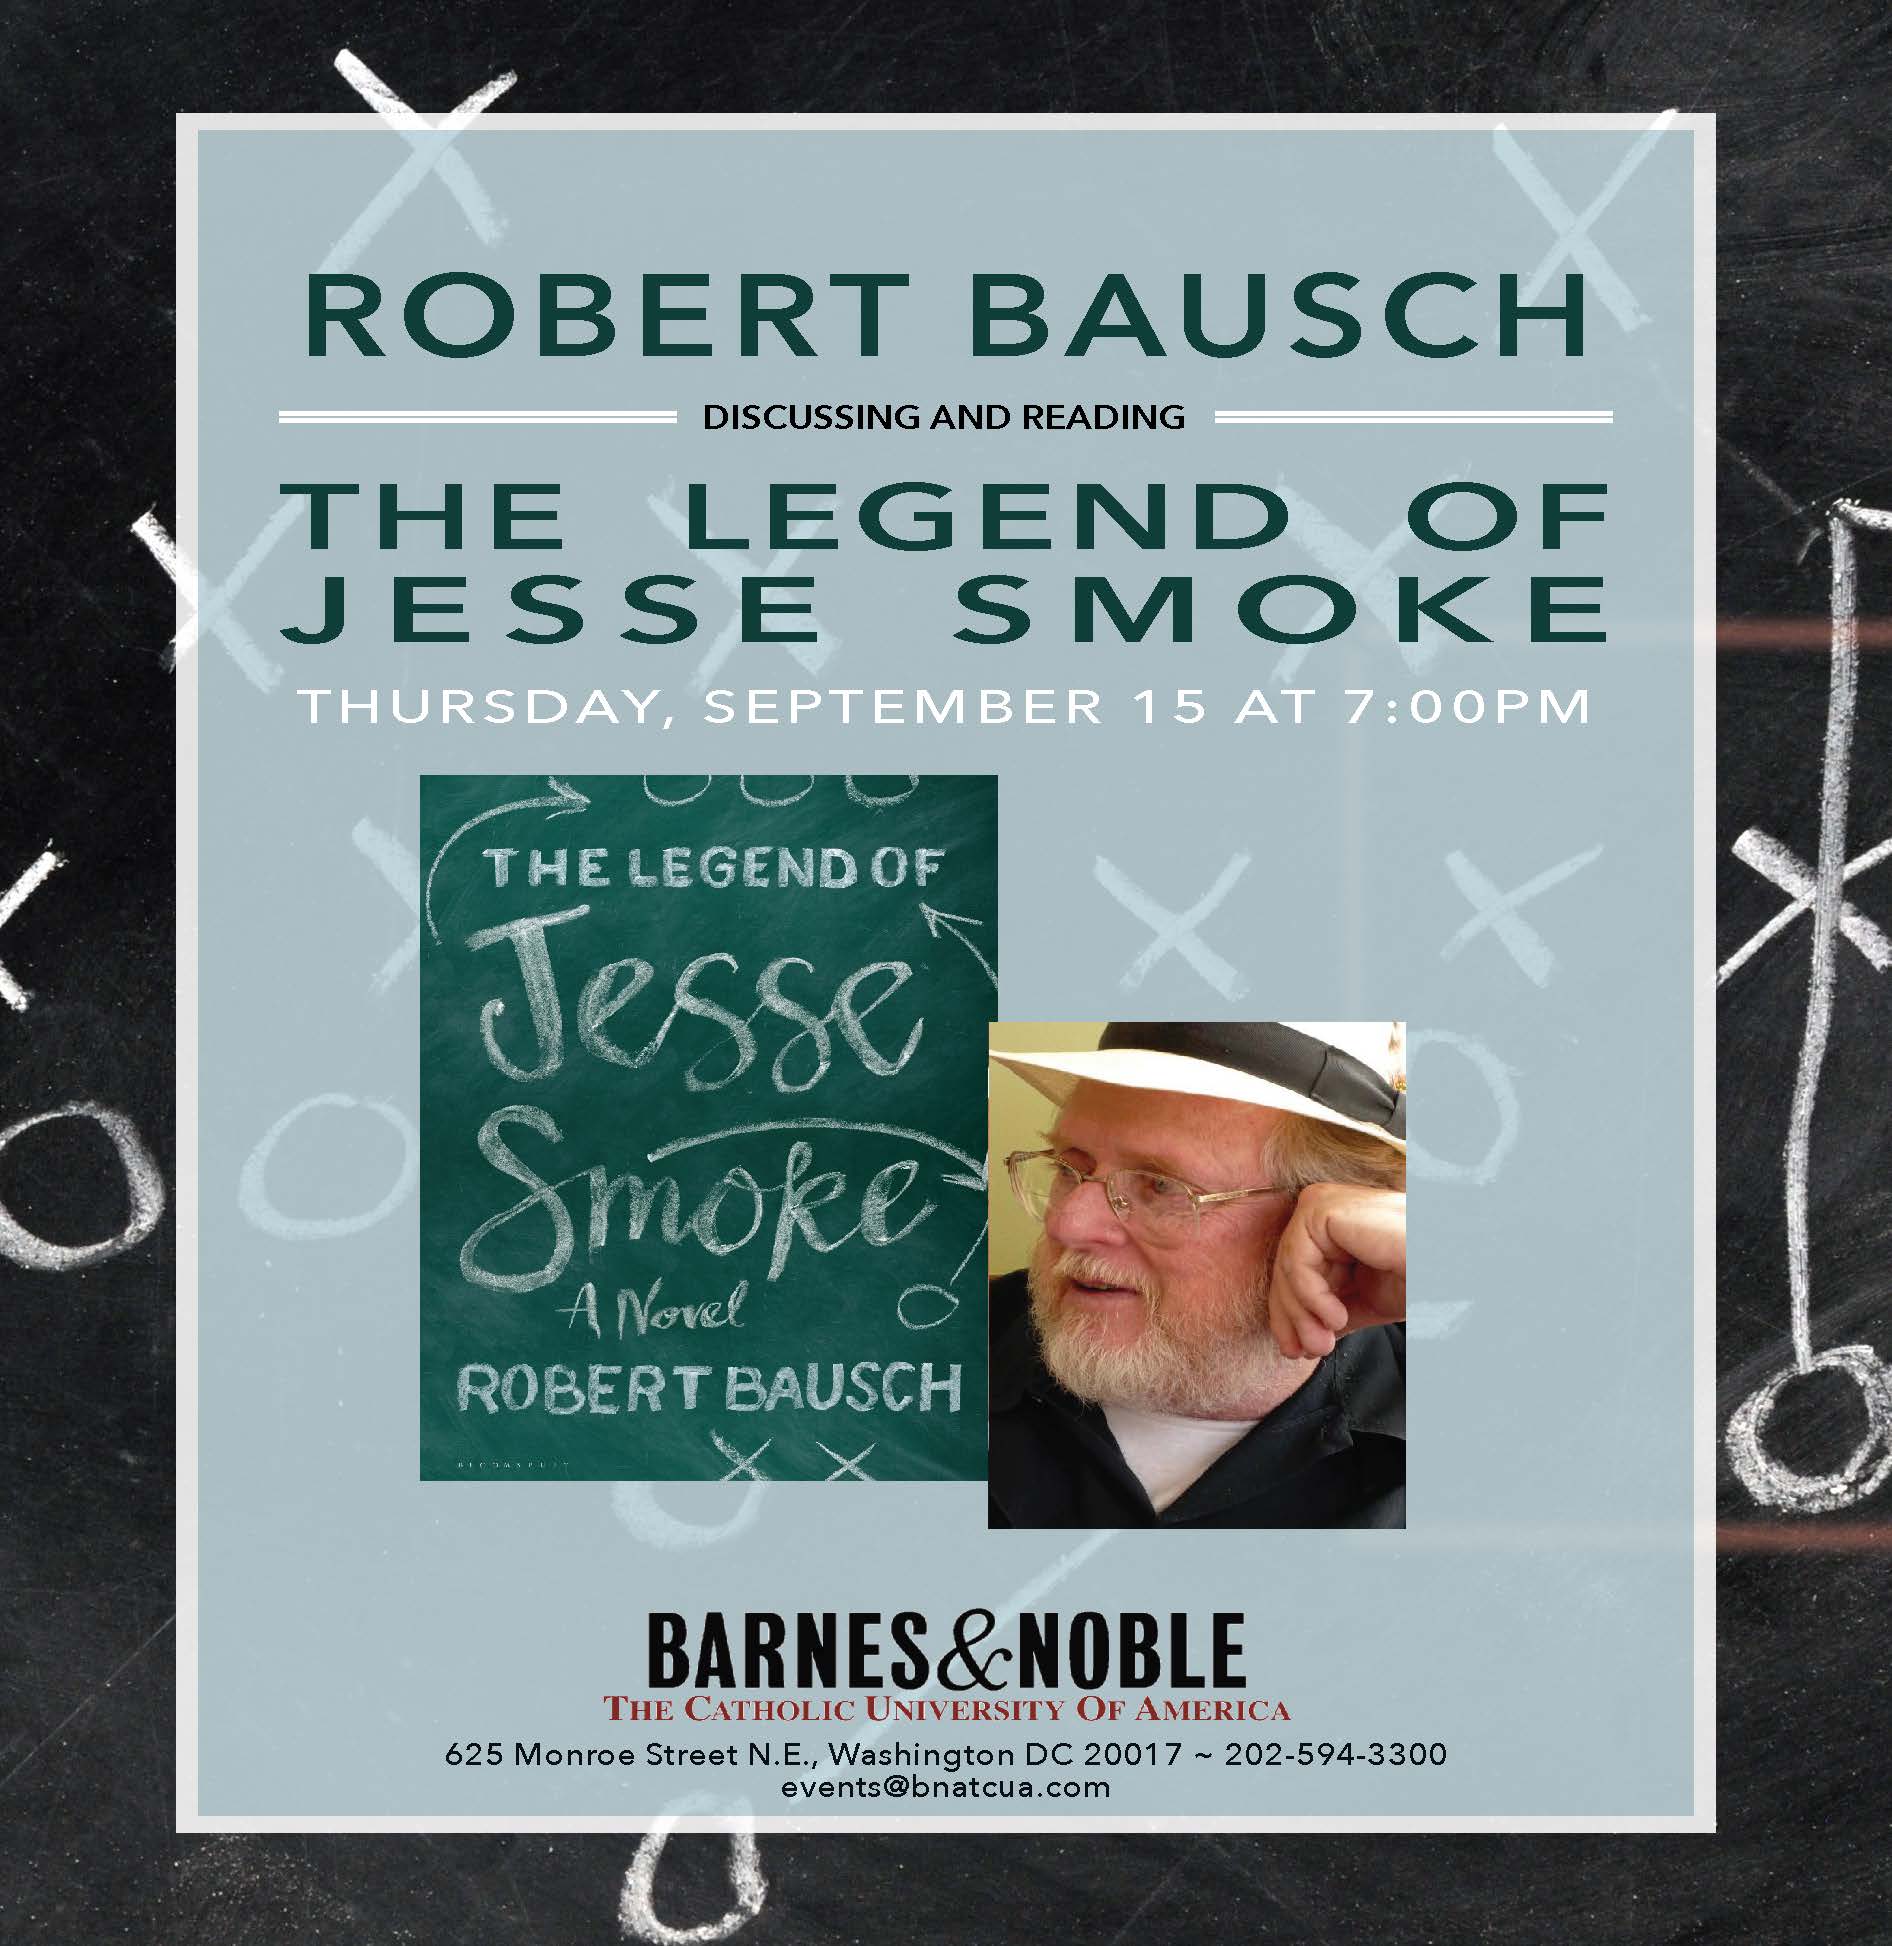 Barnes & Noble: The Legend of Jesse Smoke by Robert Bausch